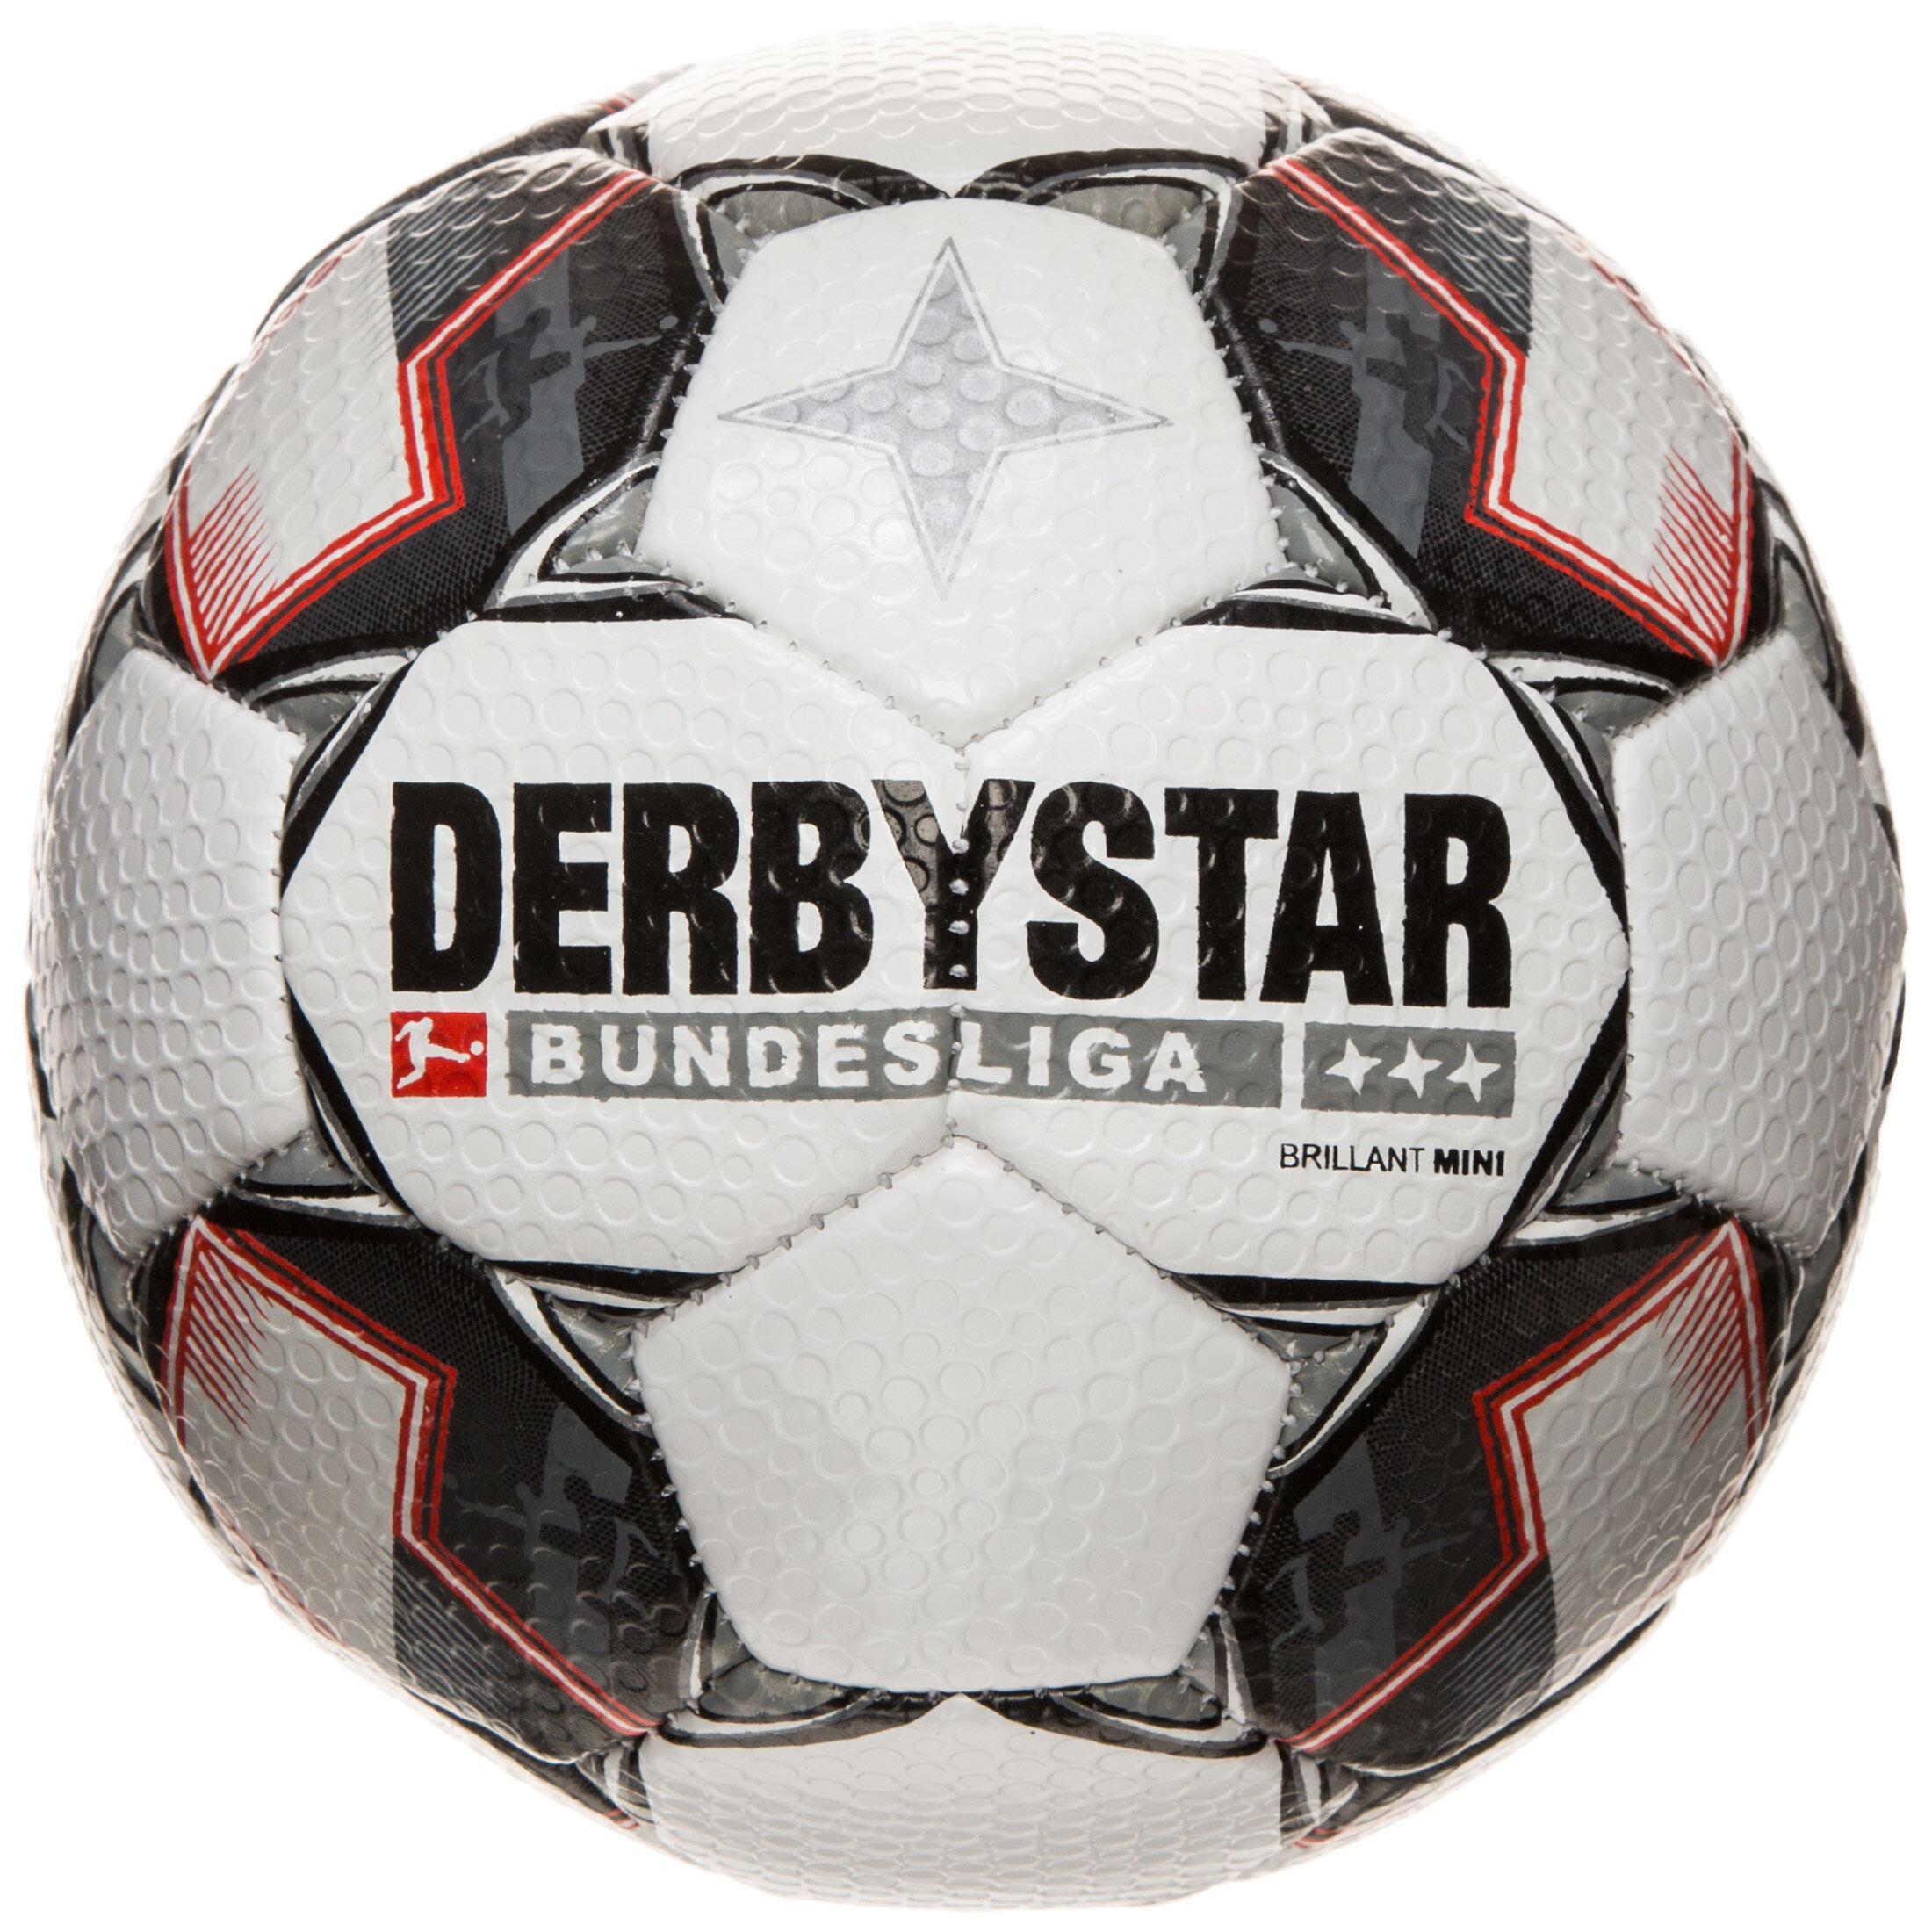 Derbystar Bundesliga Brillant Mini Fu/ßball